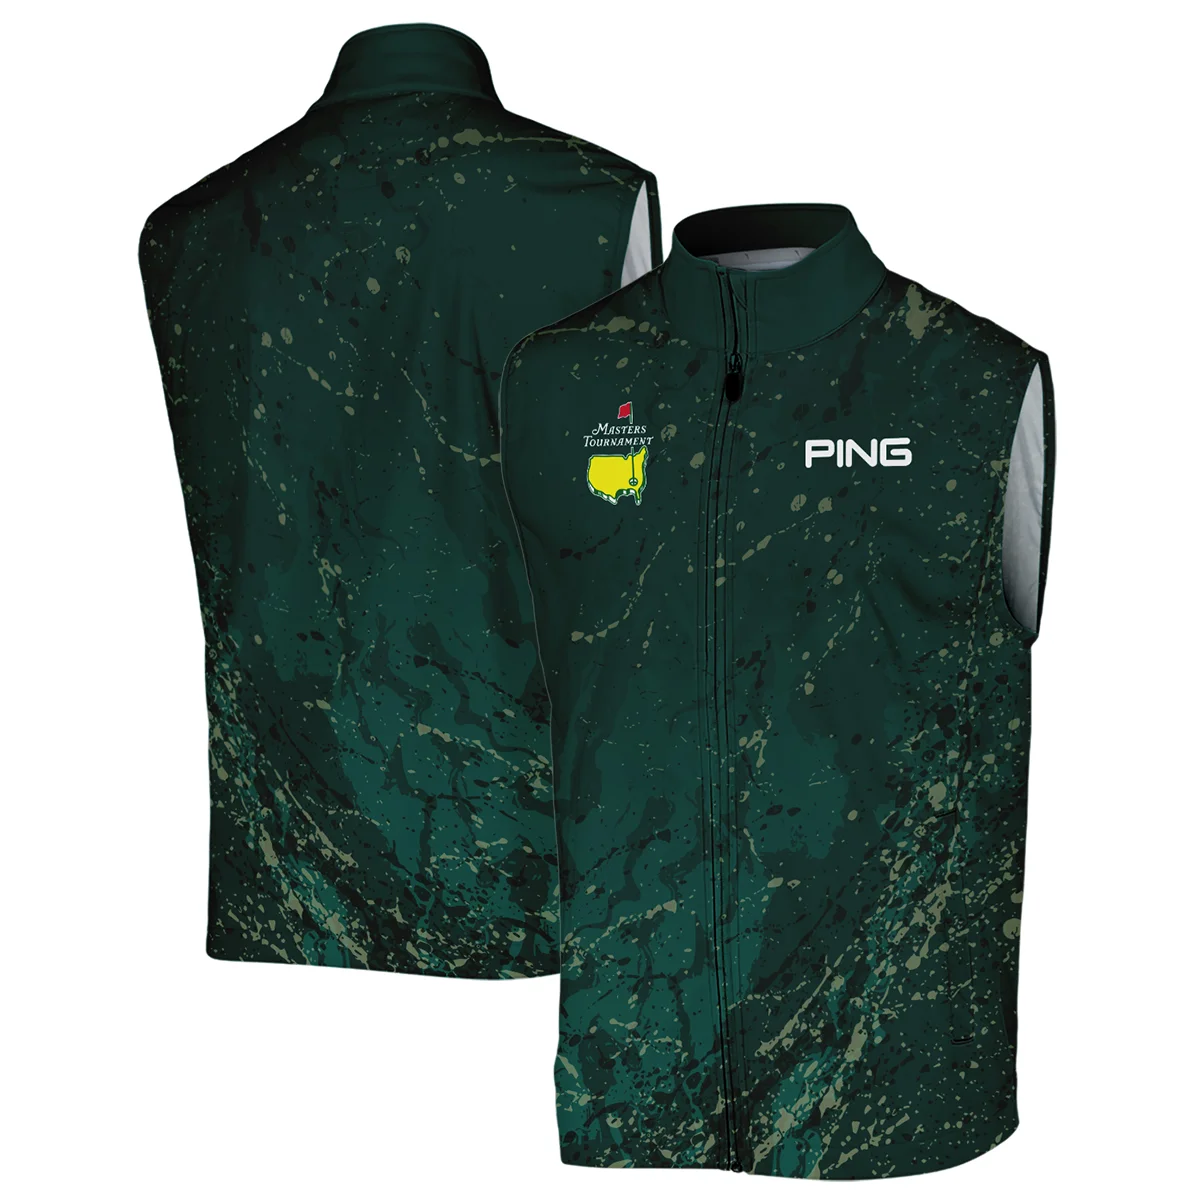 Old Cracked Texture With Gold Splash Paint Masters Tournament Ping Sleeveless Jacket Style Classic Sleeveless Jacket